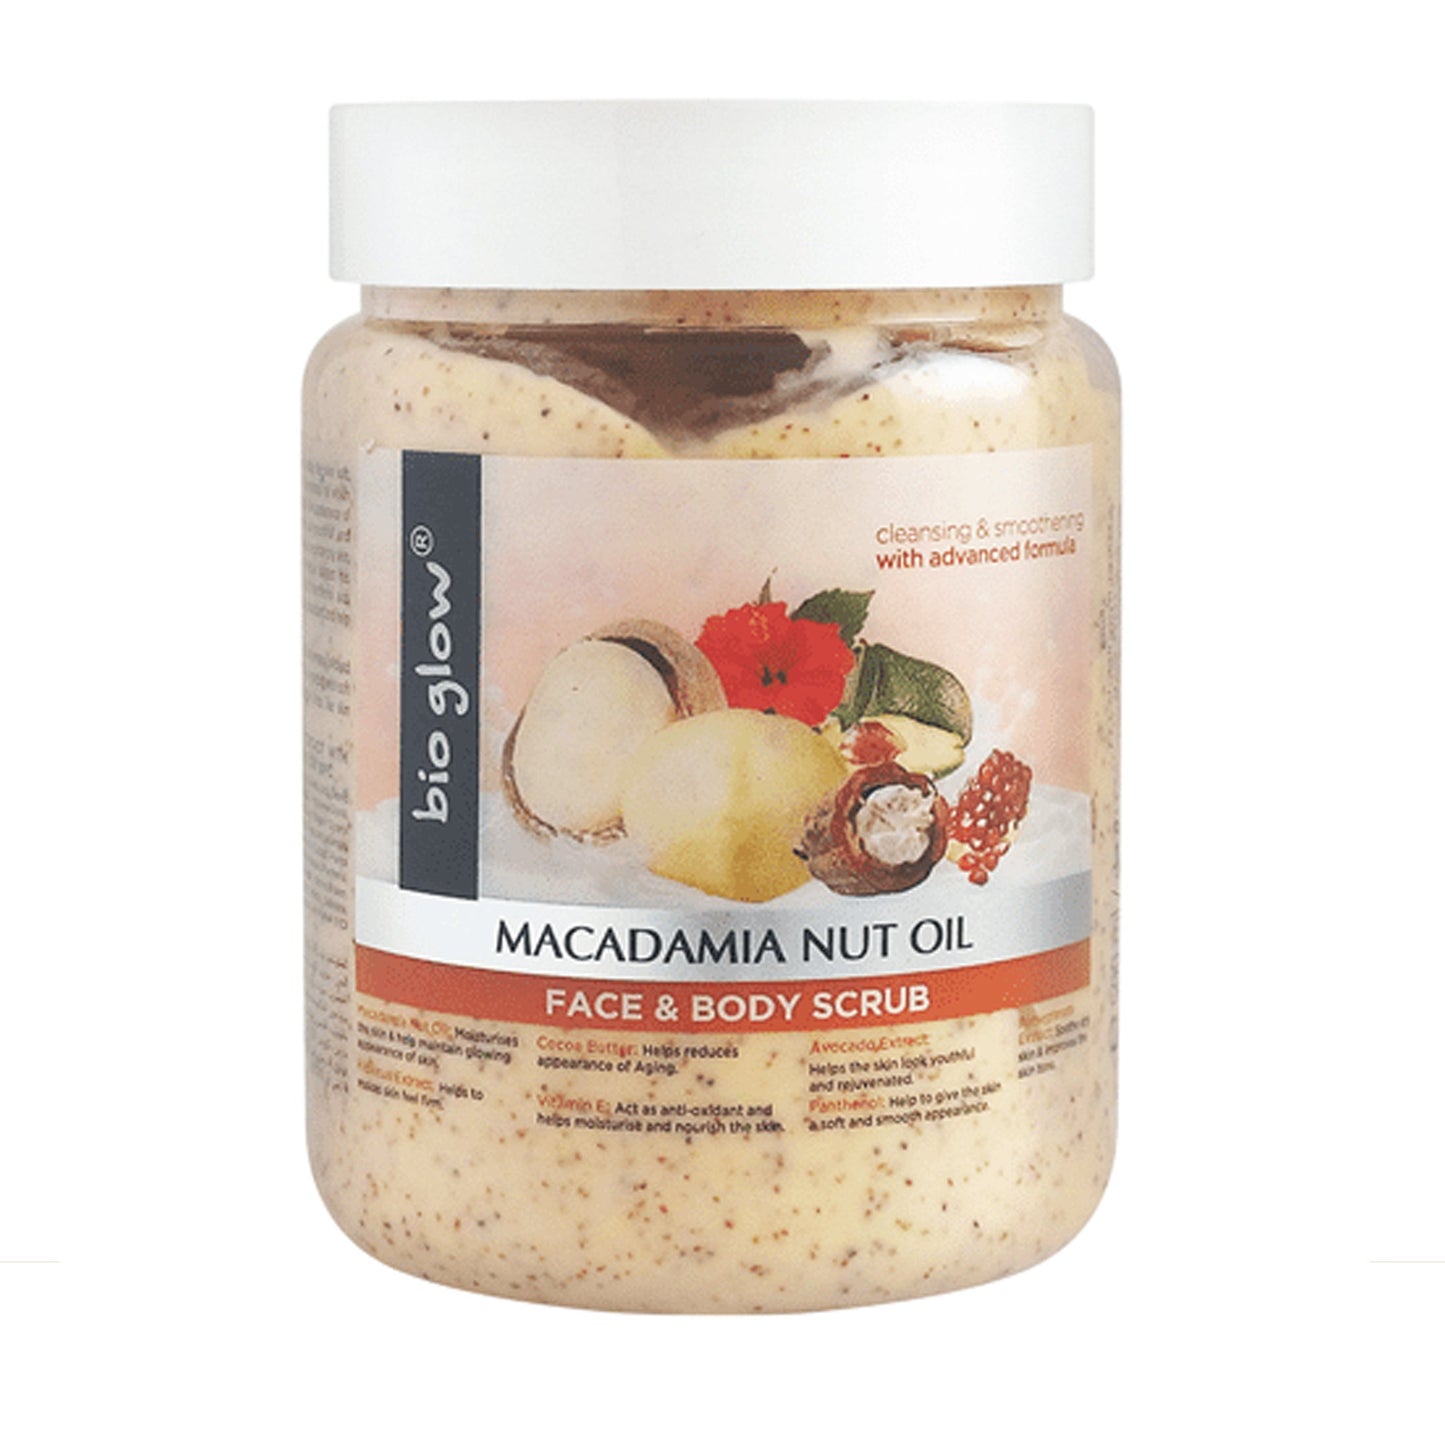 Bio Glow - Macadamia Nut Oil Face & Body Scrub - 500ml